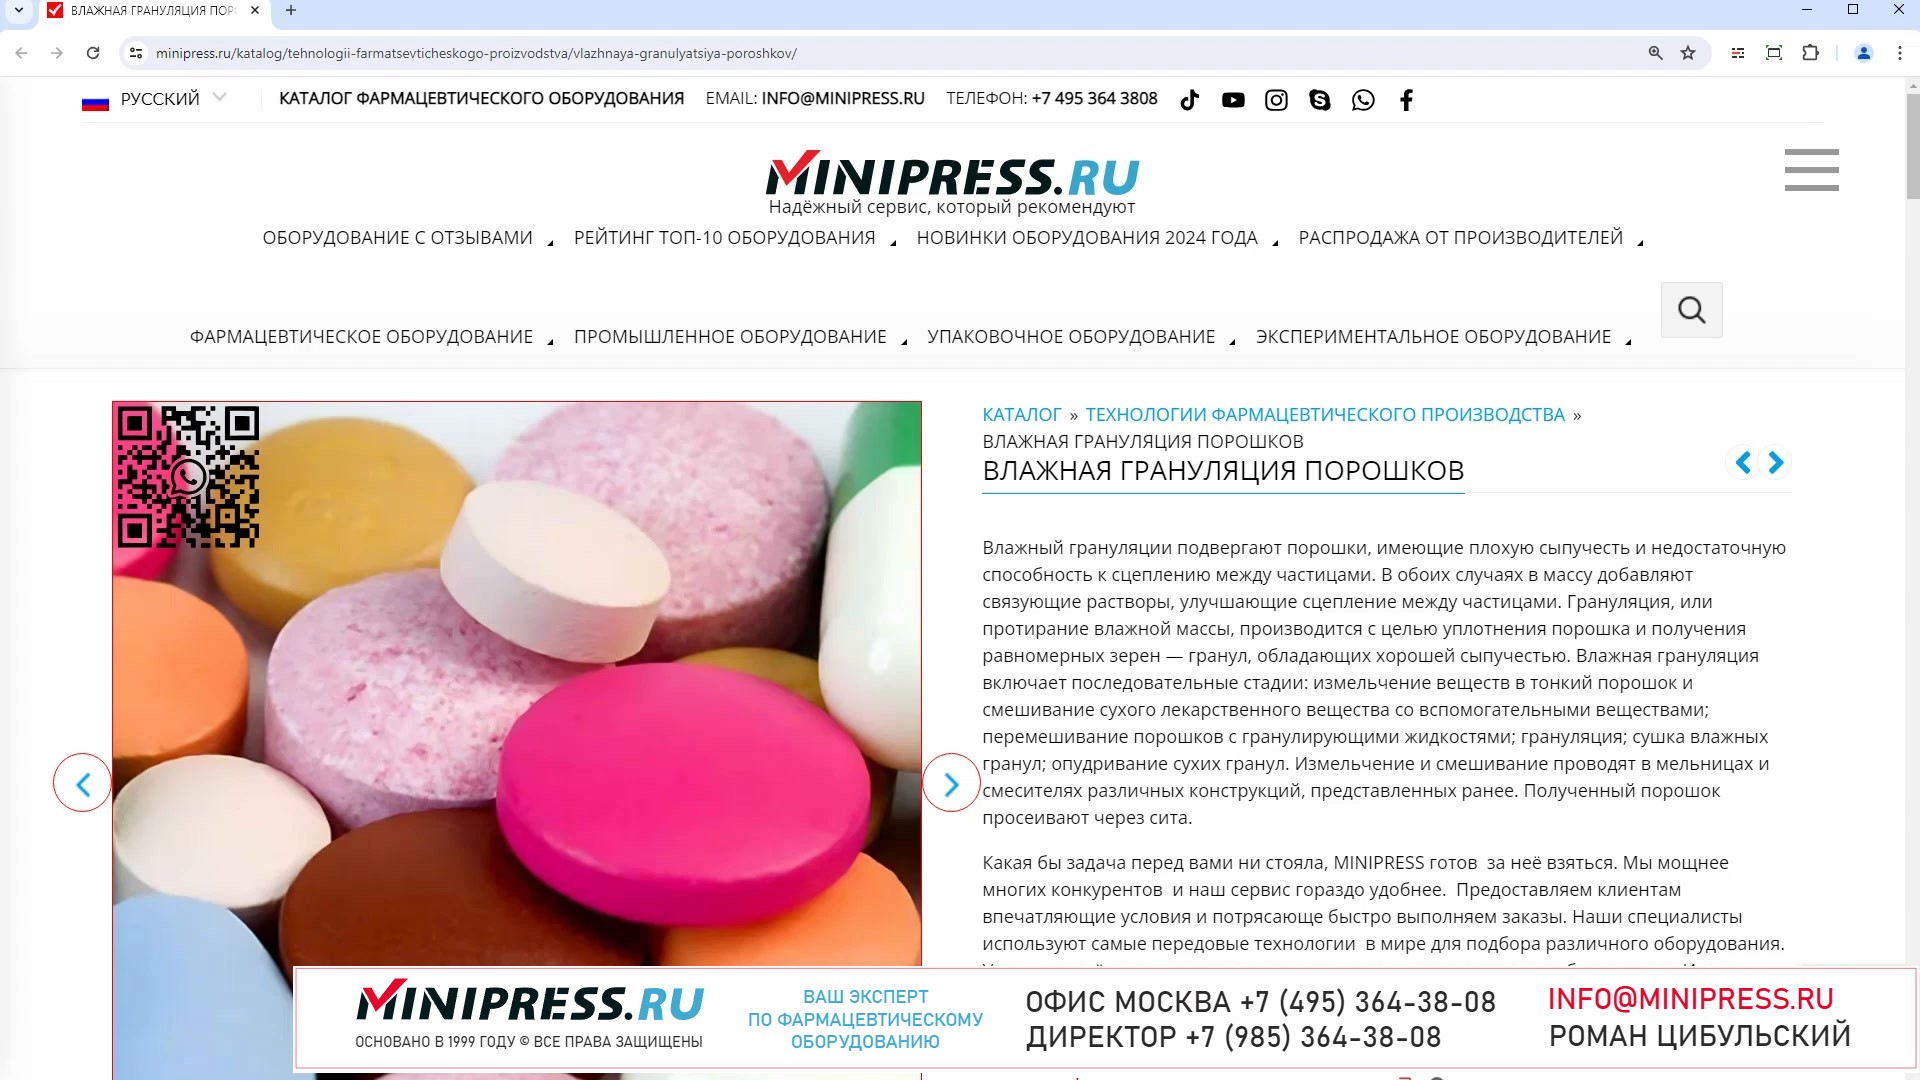 Minipress.ru Влажная грануляция порошков